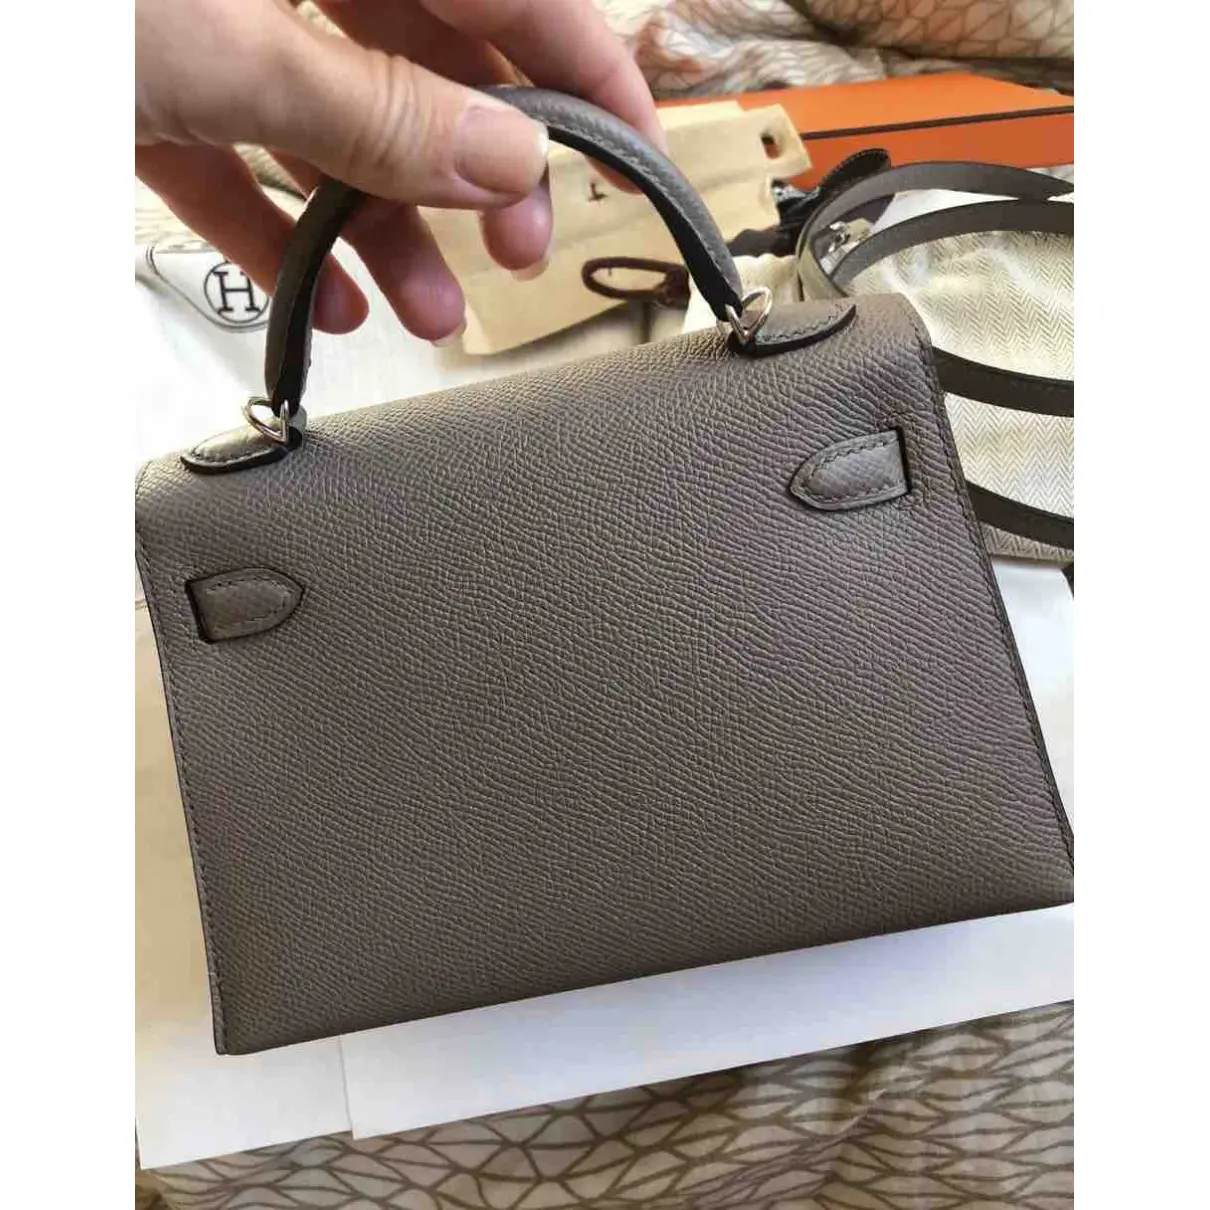 Buy Hermès Kelly 25 leather handbag online